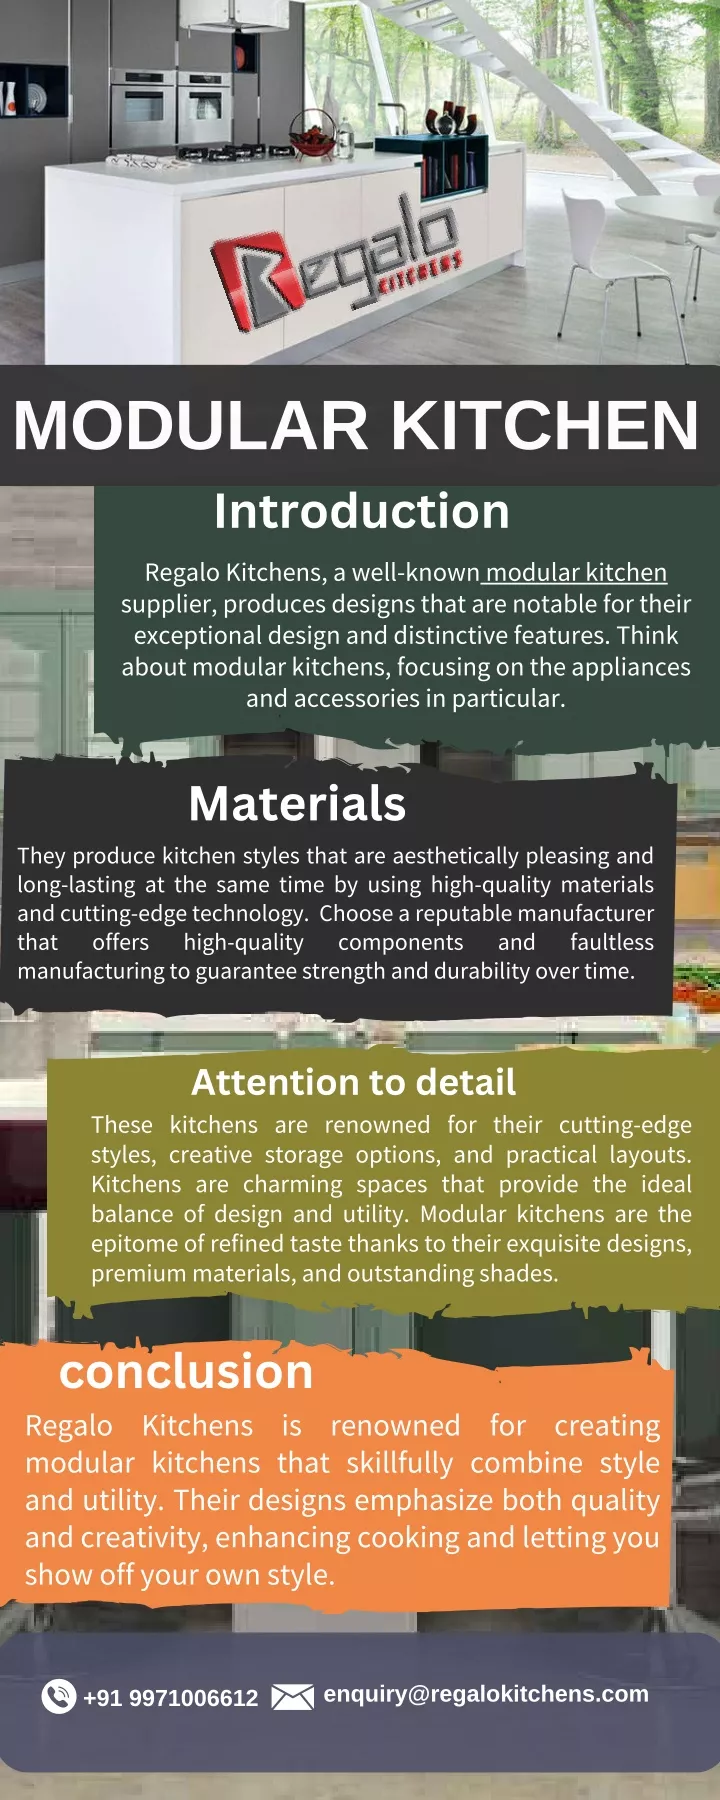 modular kitchen introduction